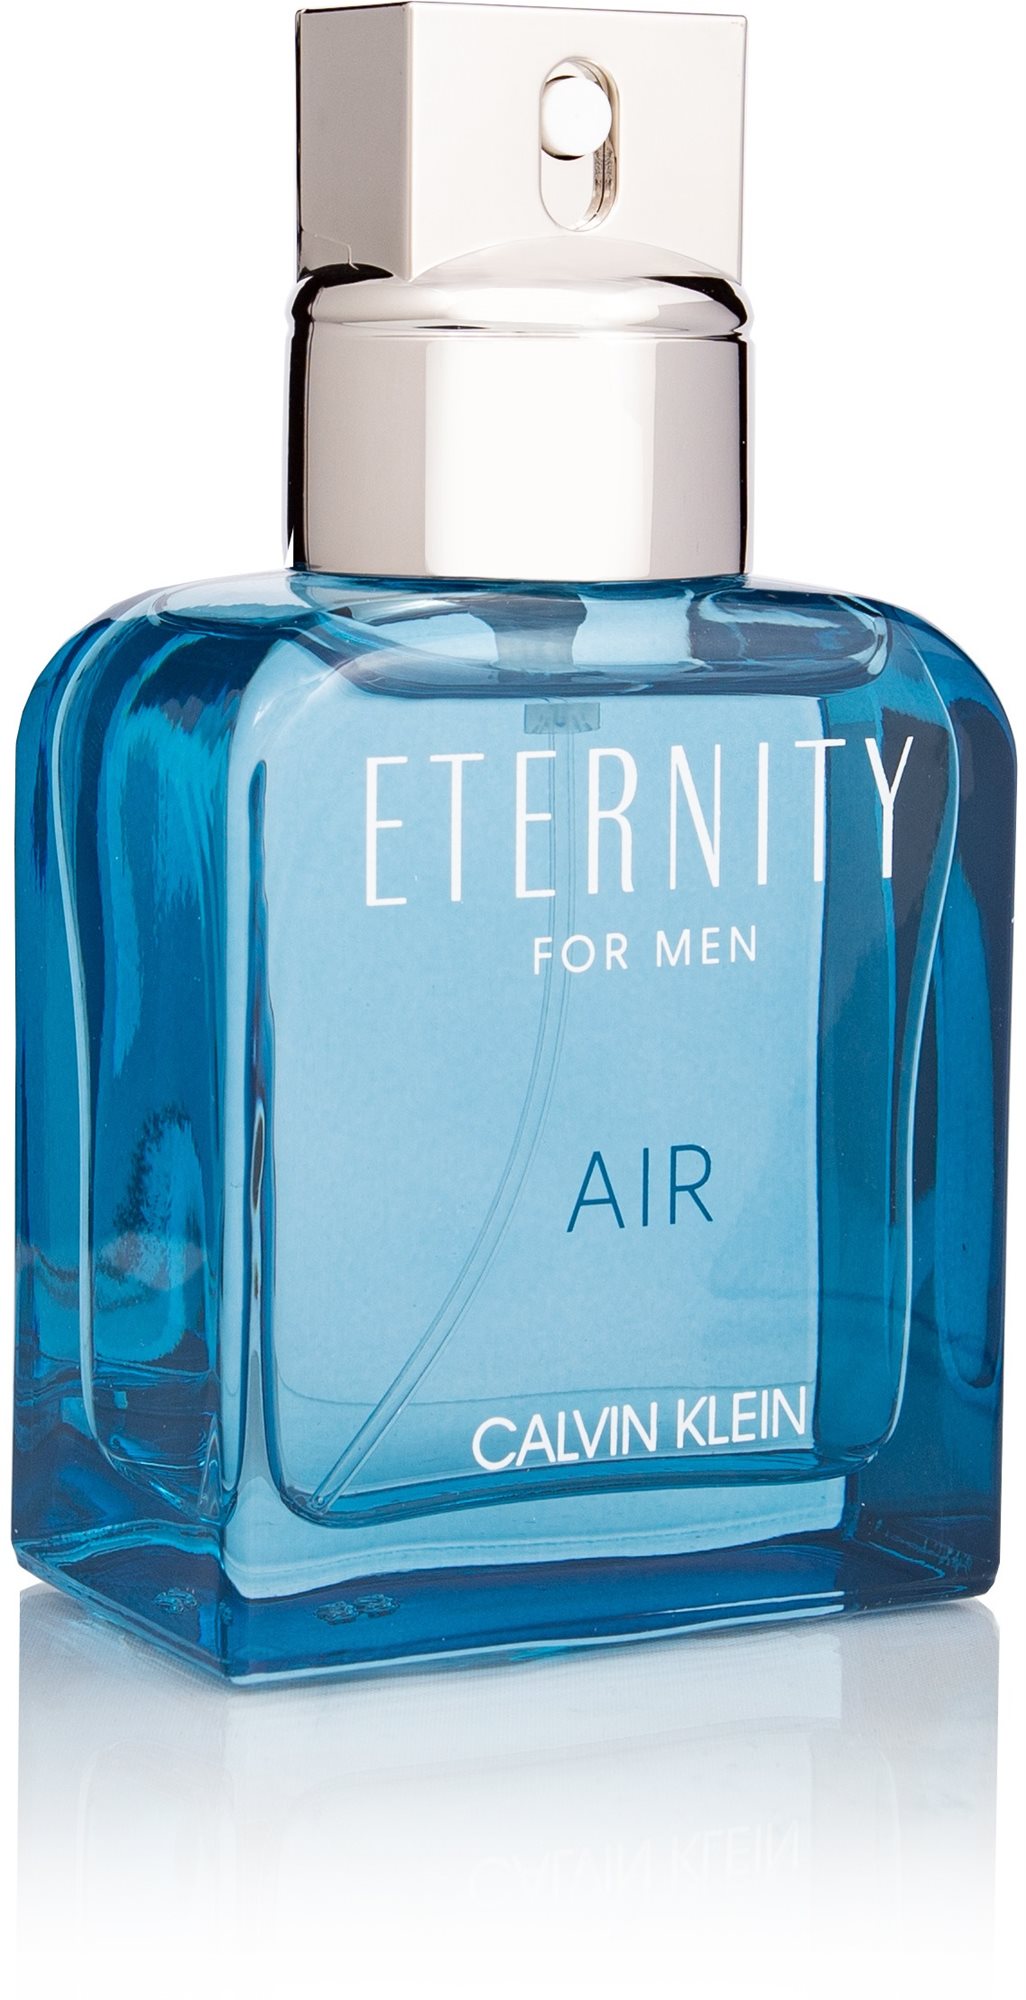 CALVIN KLEIN Eternity Air For Men EdT